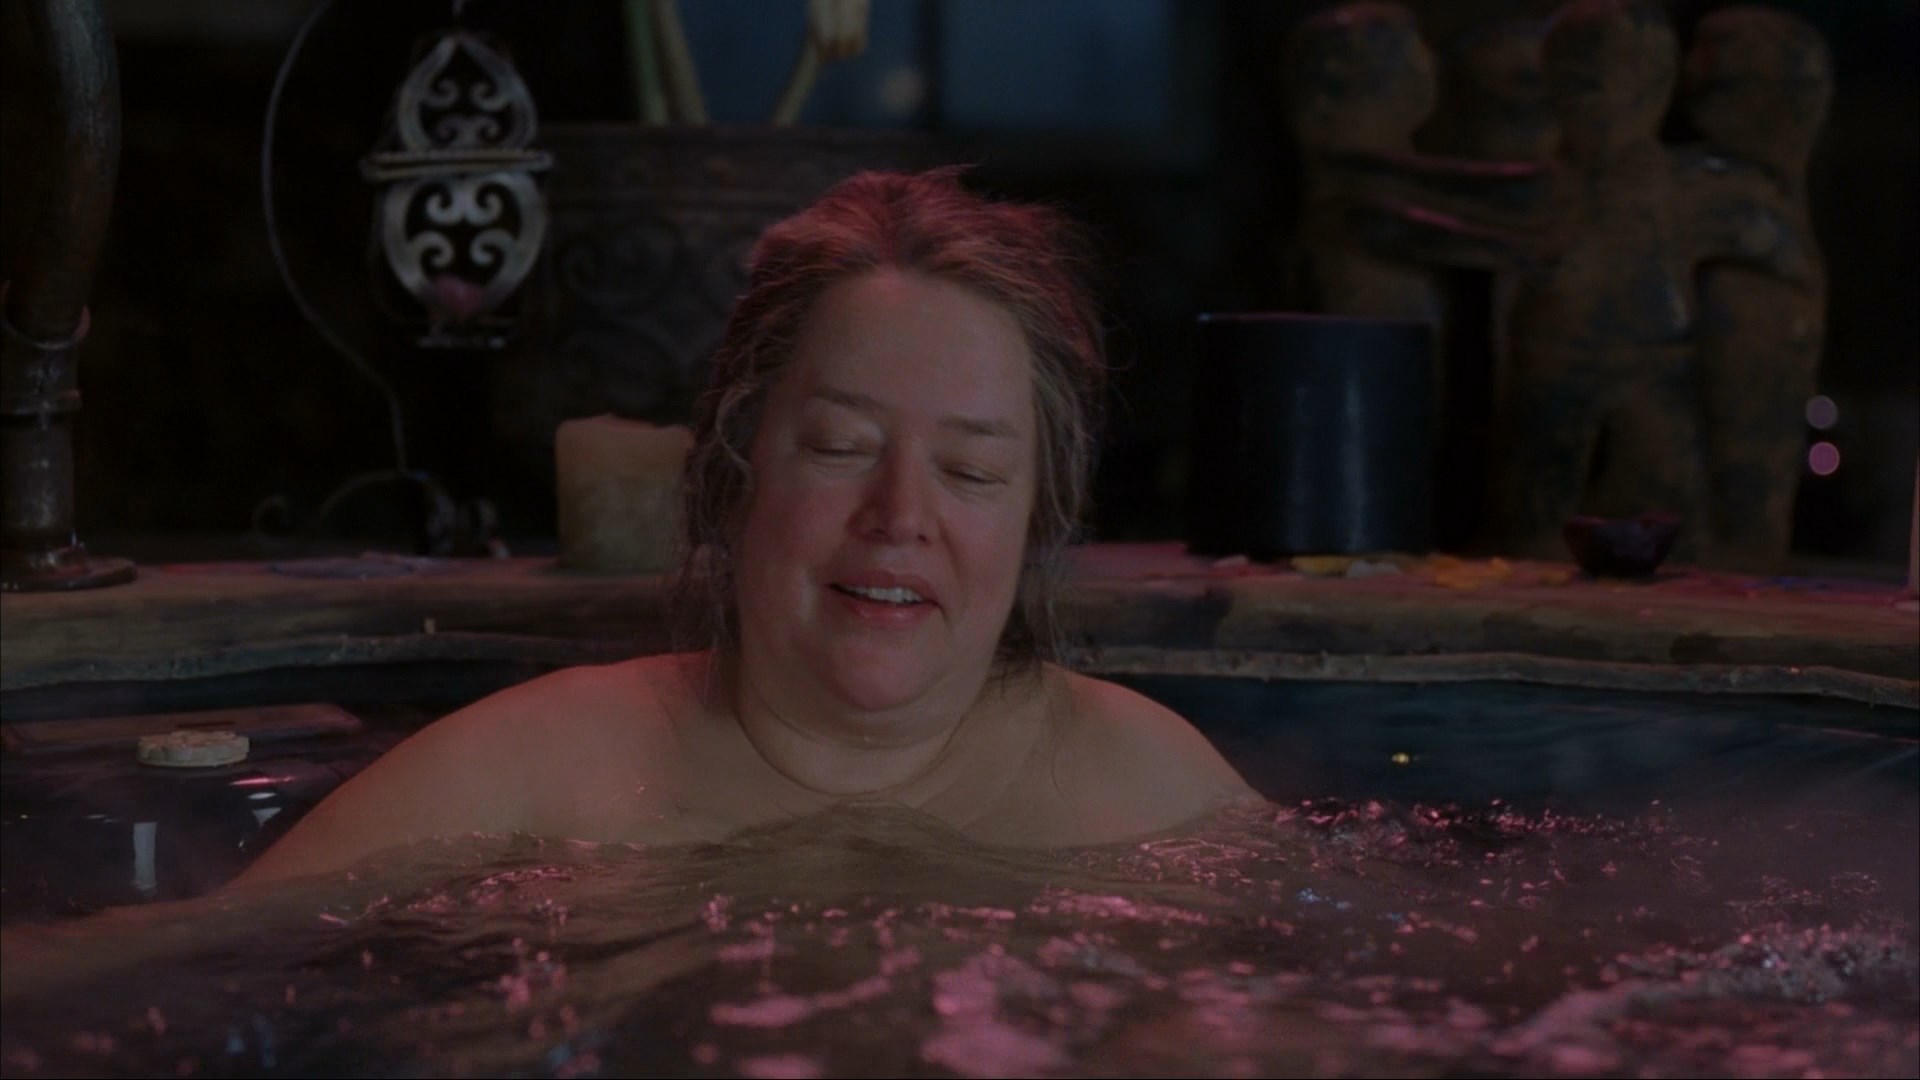 About schmidt hot tub scene